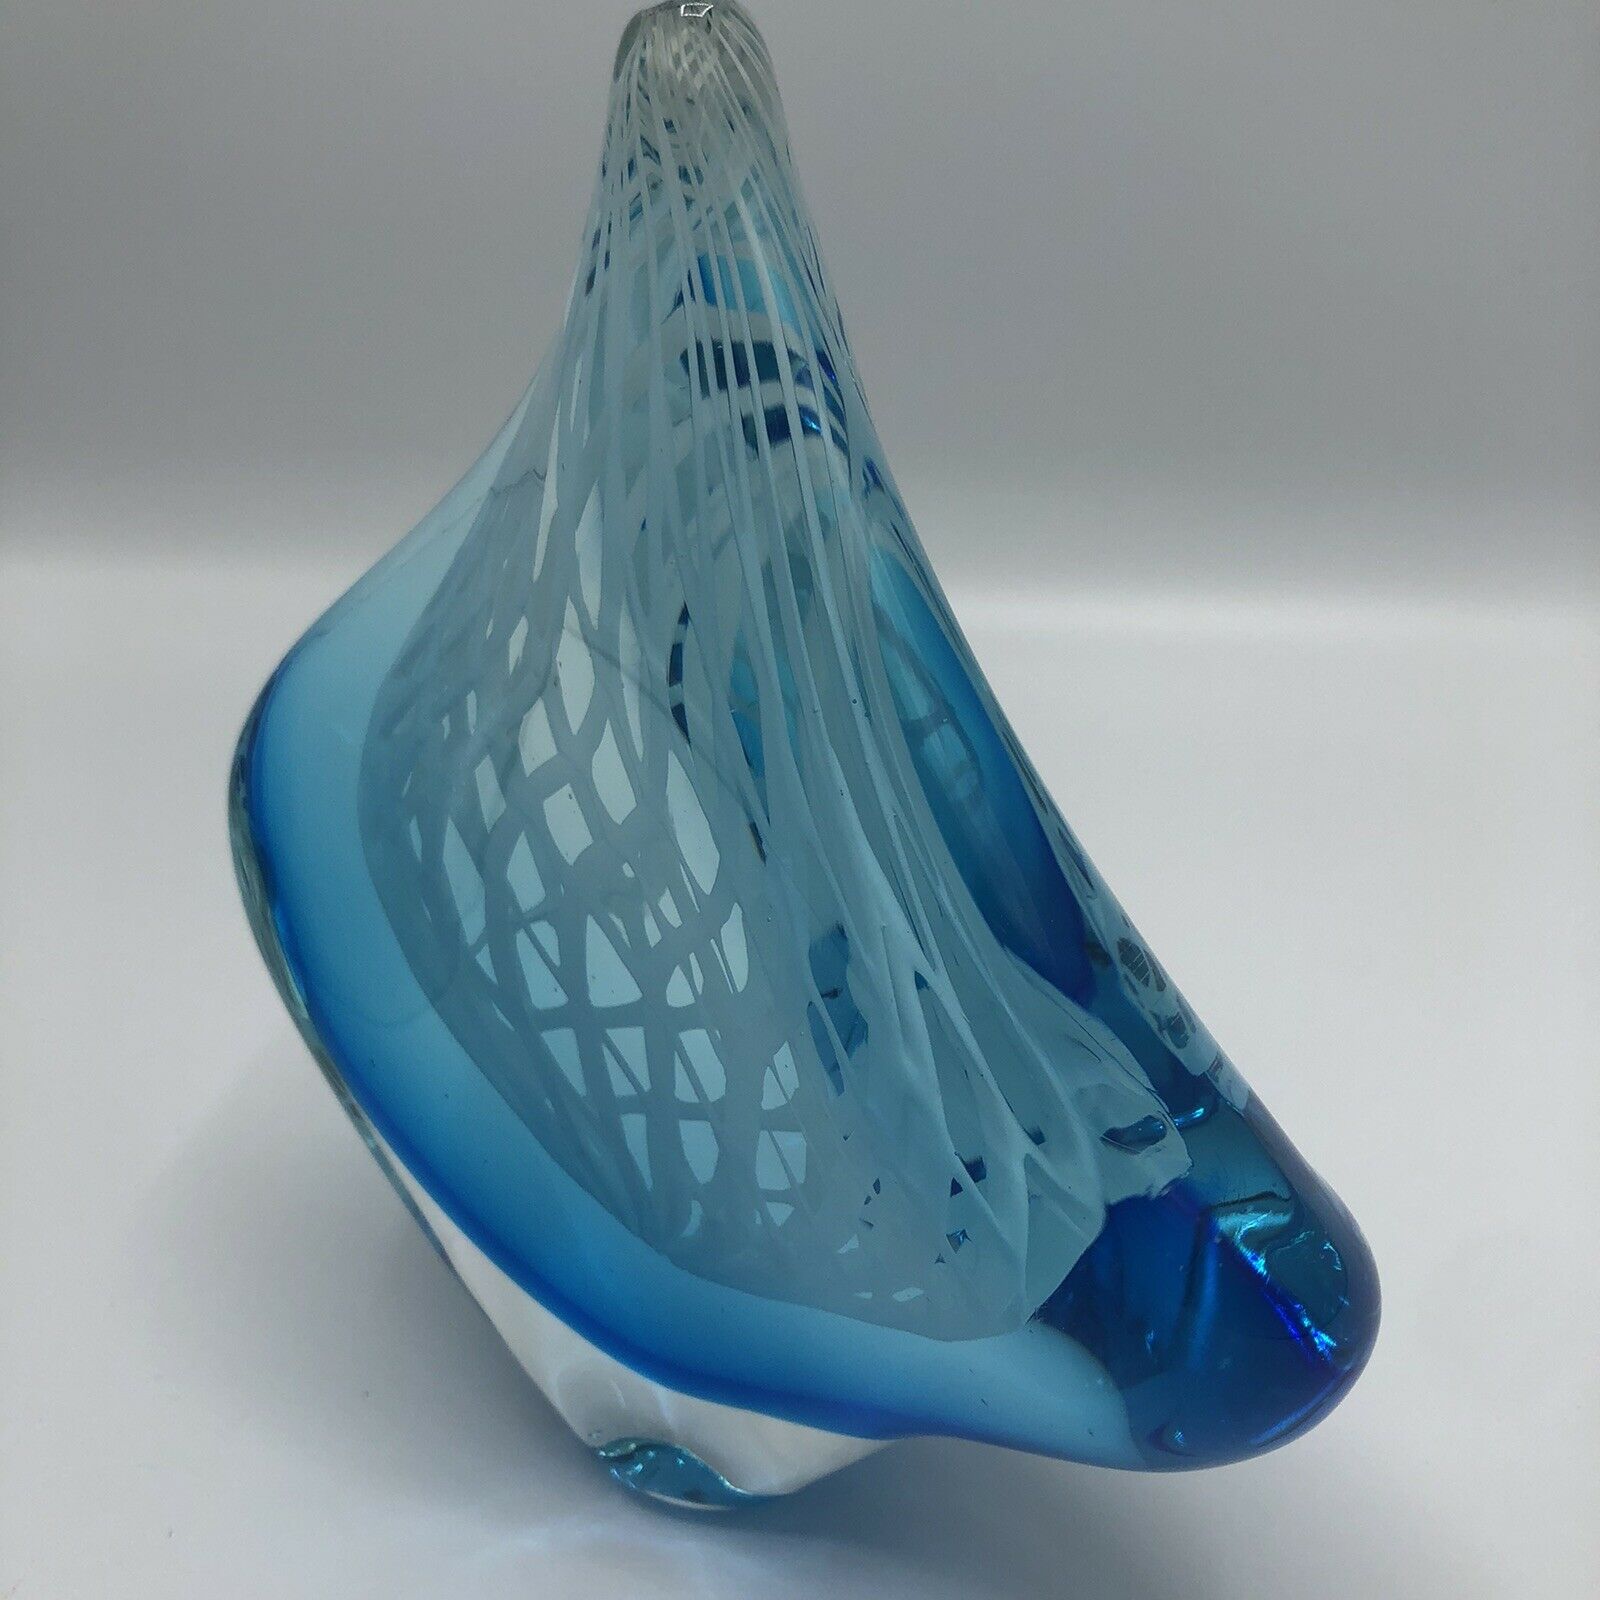 Linen Universe Glass Turquoise & White Sculpture - 8.5"